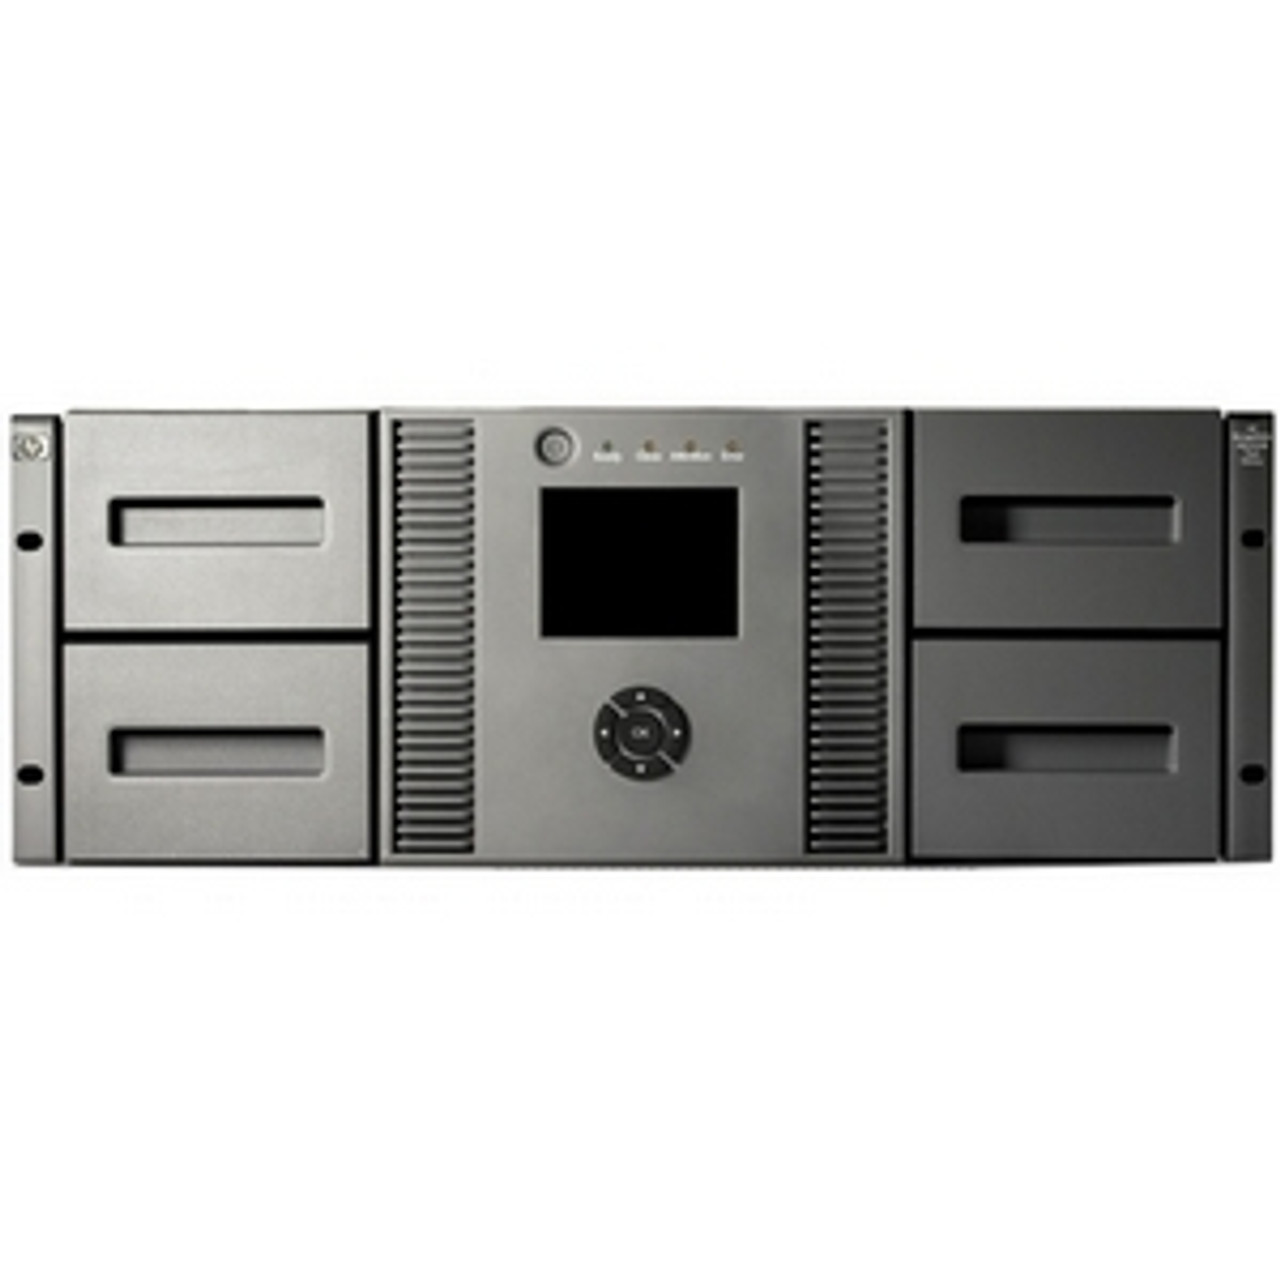 AH172A - HP StorageWorks MSL4048 LTO Ultrium 920 Tape Library 2 x Drive/48 x Slot 19.2TB (Native) / 38.4TB (Compressed) SCSI Network